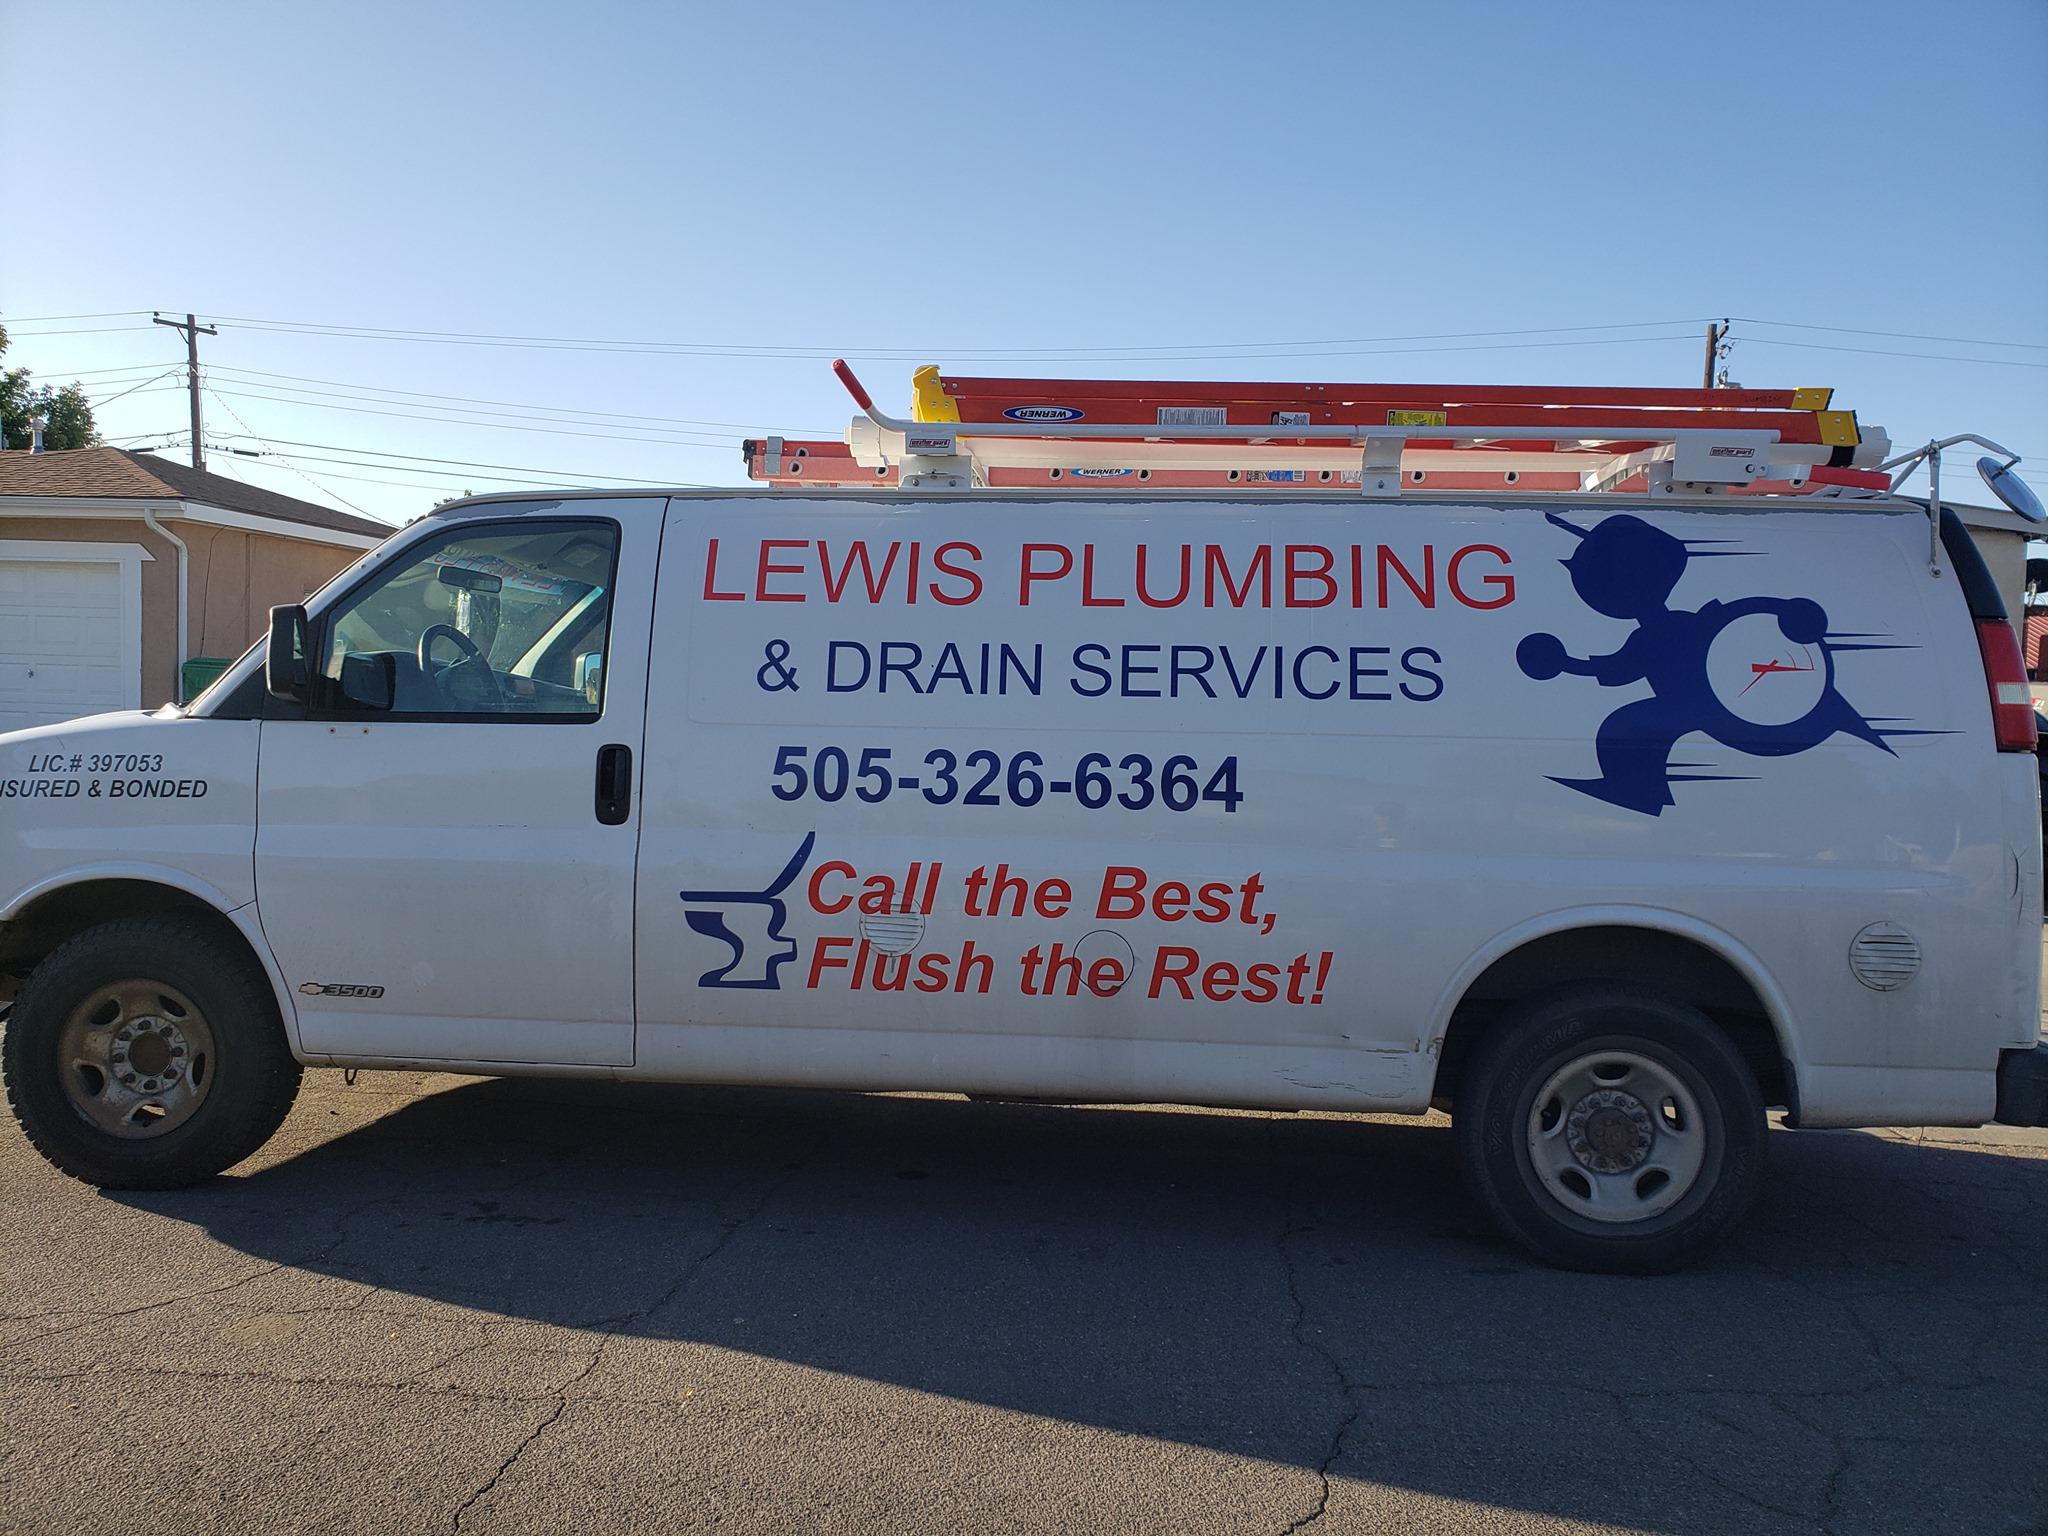 Lewis Plumbing & Drain Services, LLC - Farmington, NM - (505)326-6364 | ShowMeLocal.com